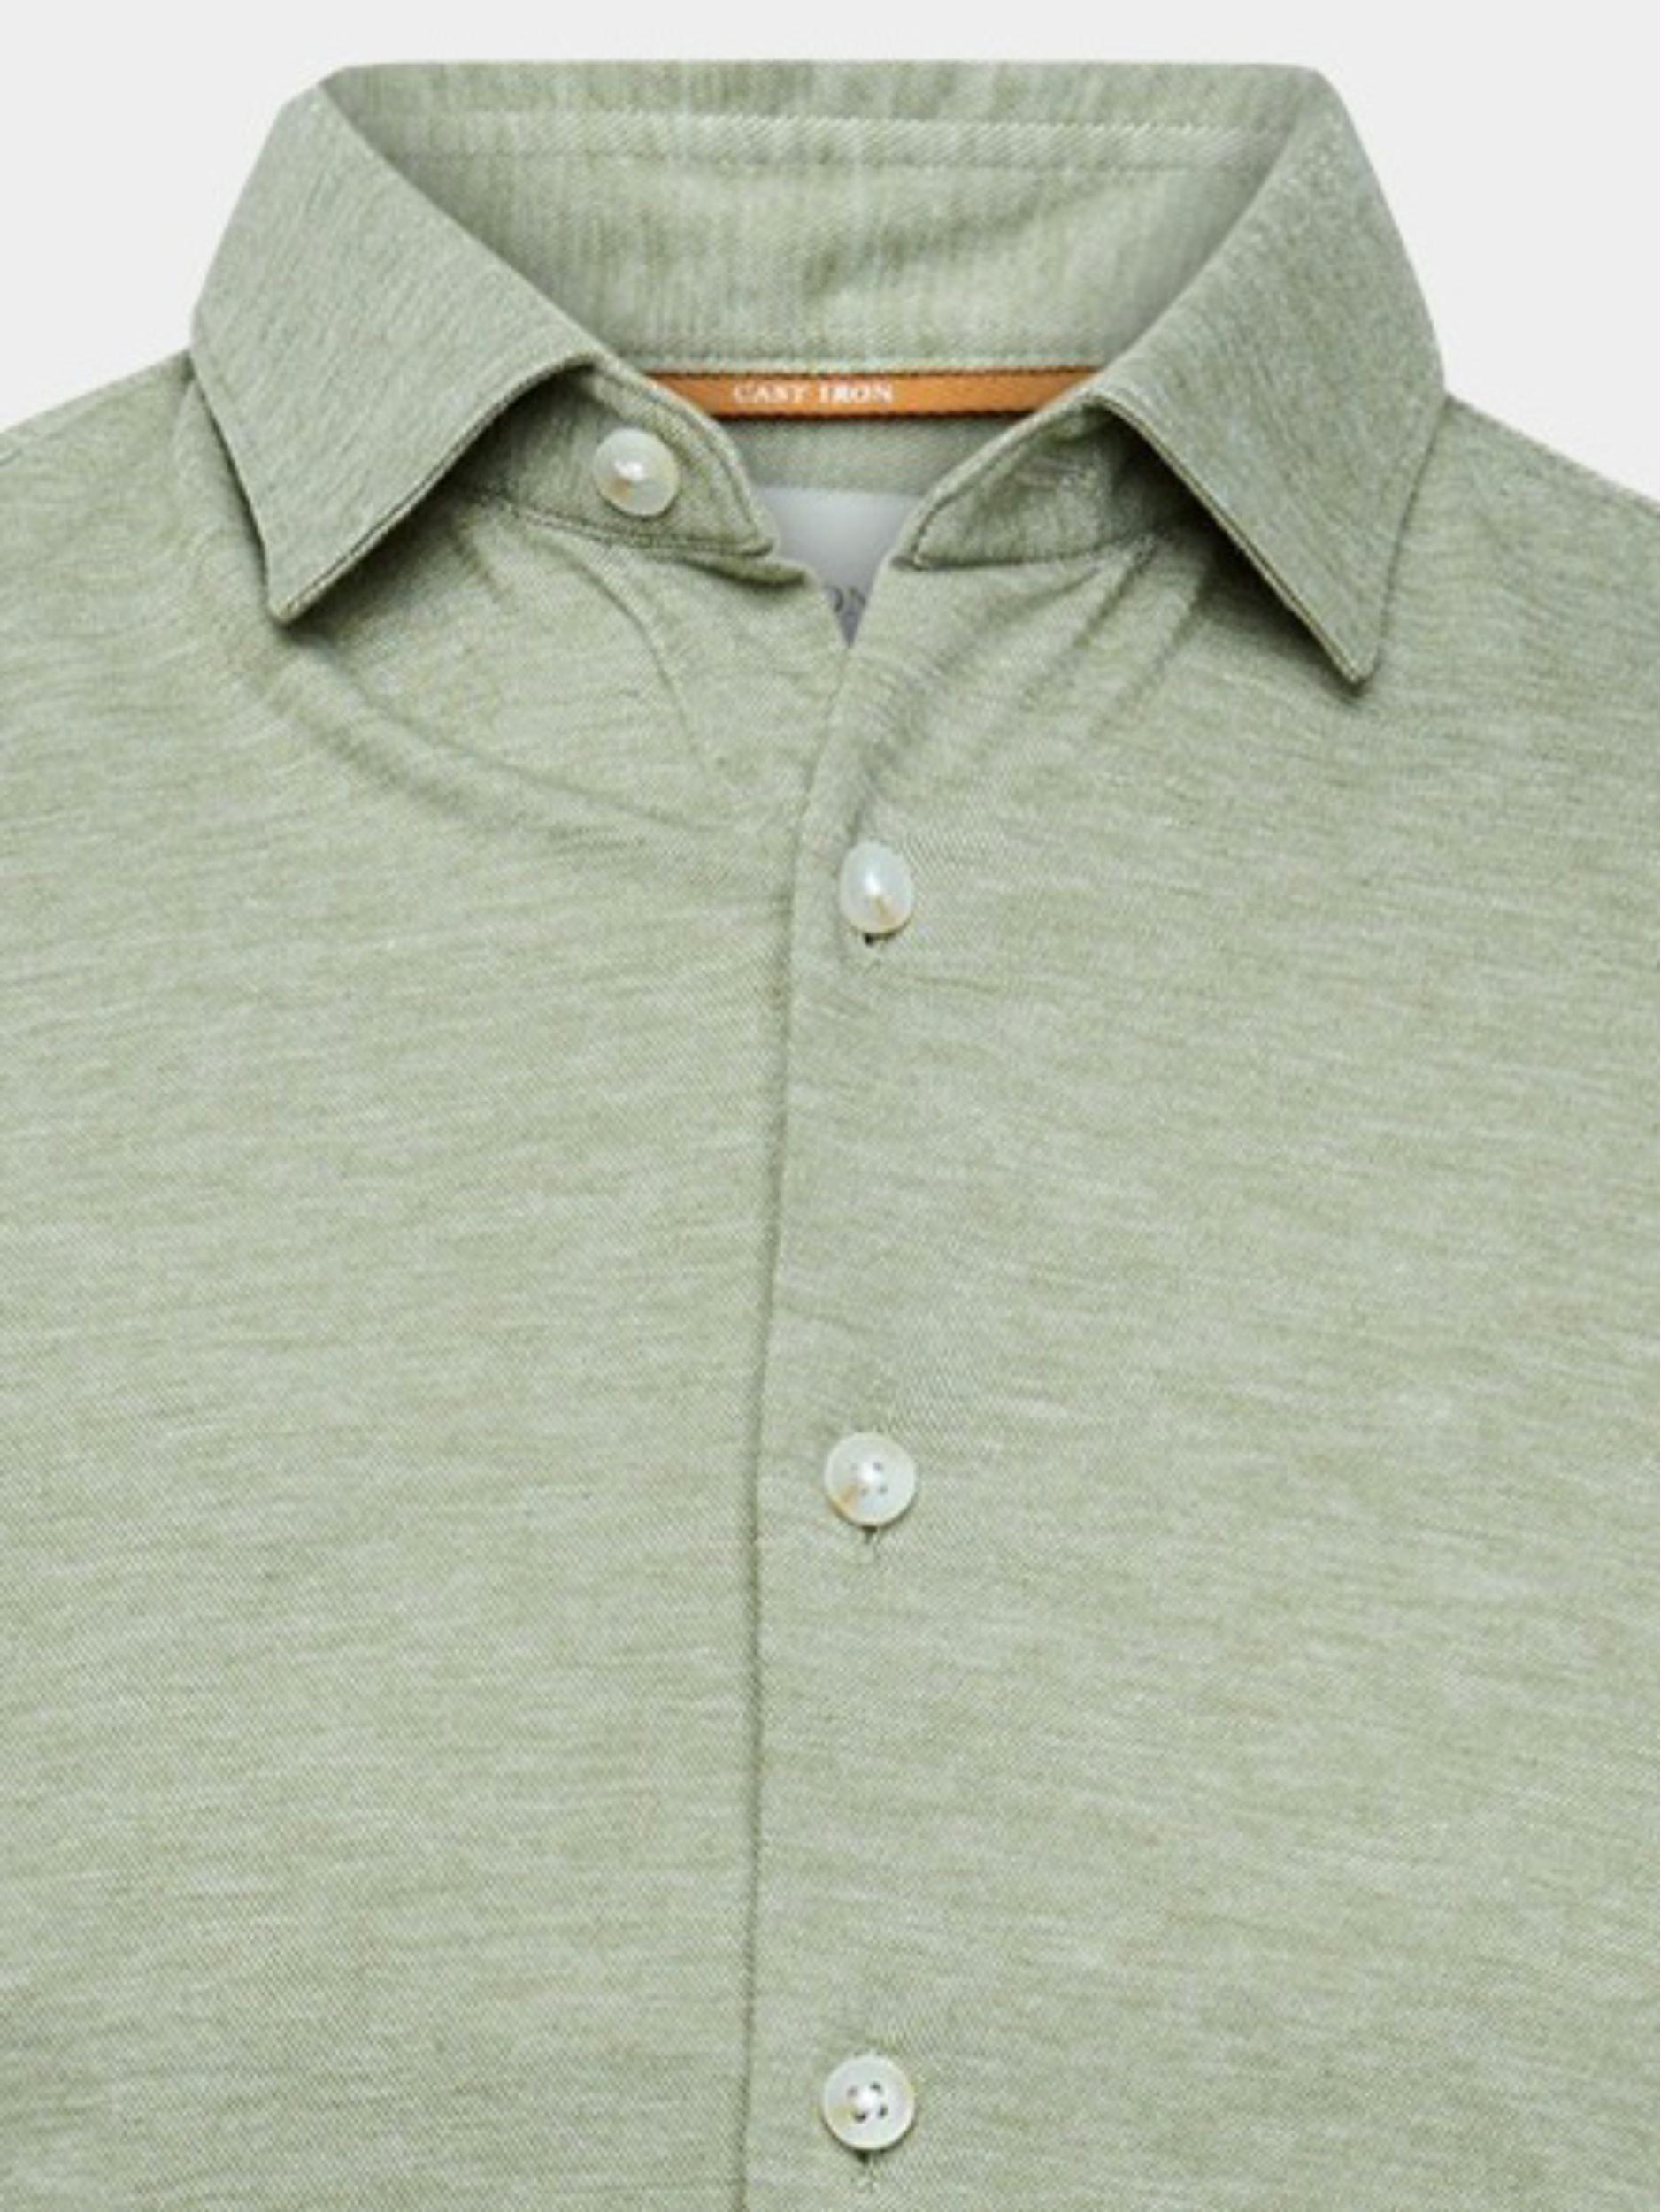 Cast Iron Casual hemd lange mouw Groen Long Sleeve Shirt CF Jersey P CSI2302201/6381